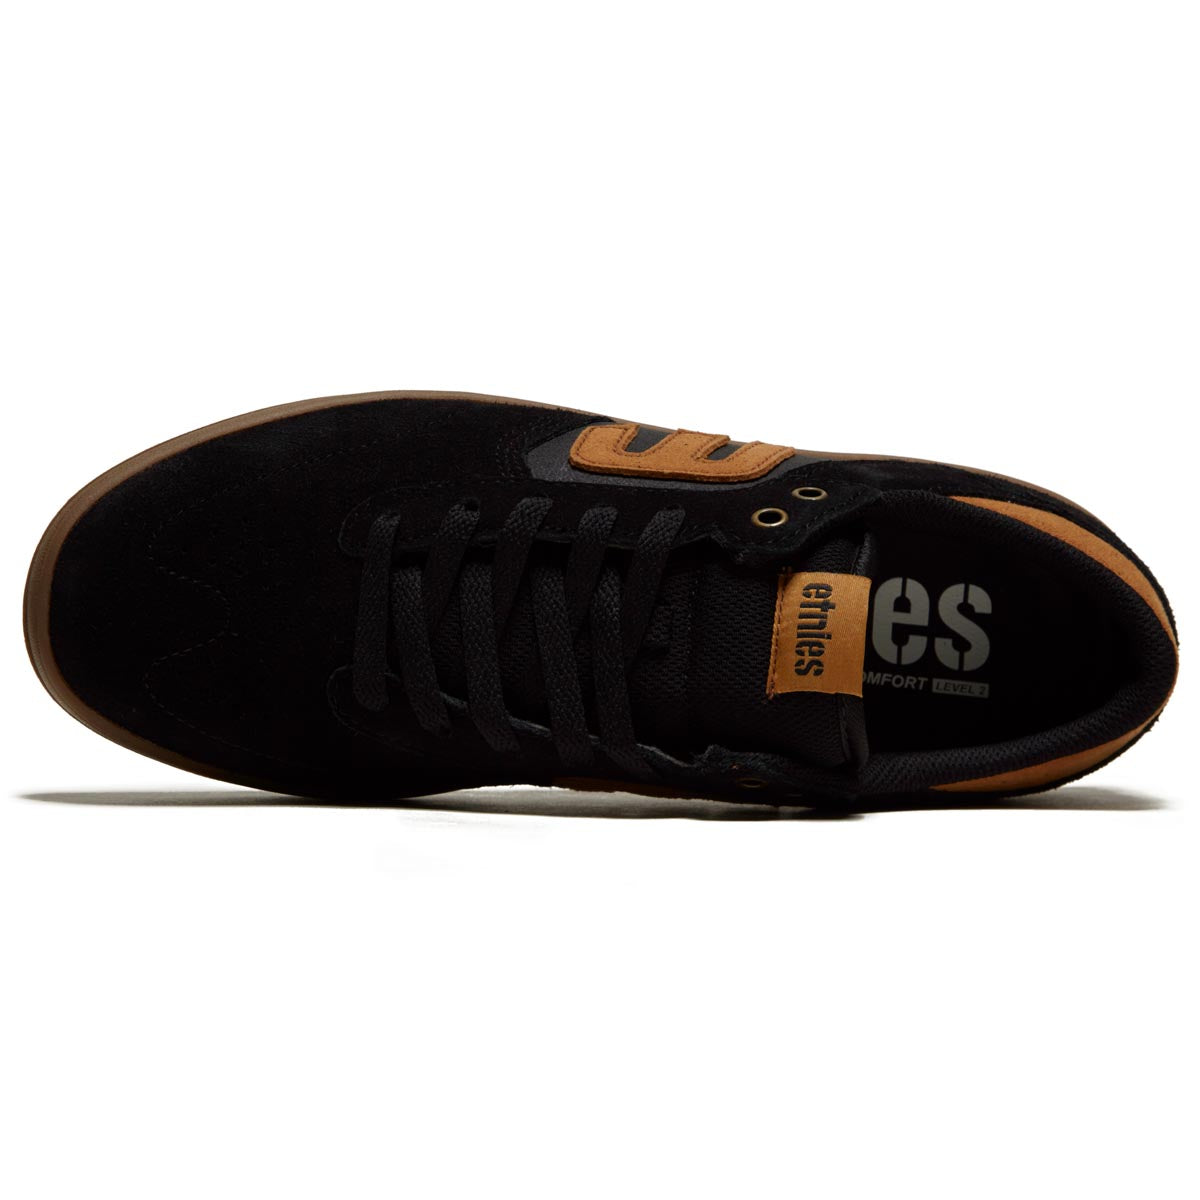 Etnies Windrow Shoes - Black/Gum image 3